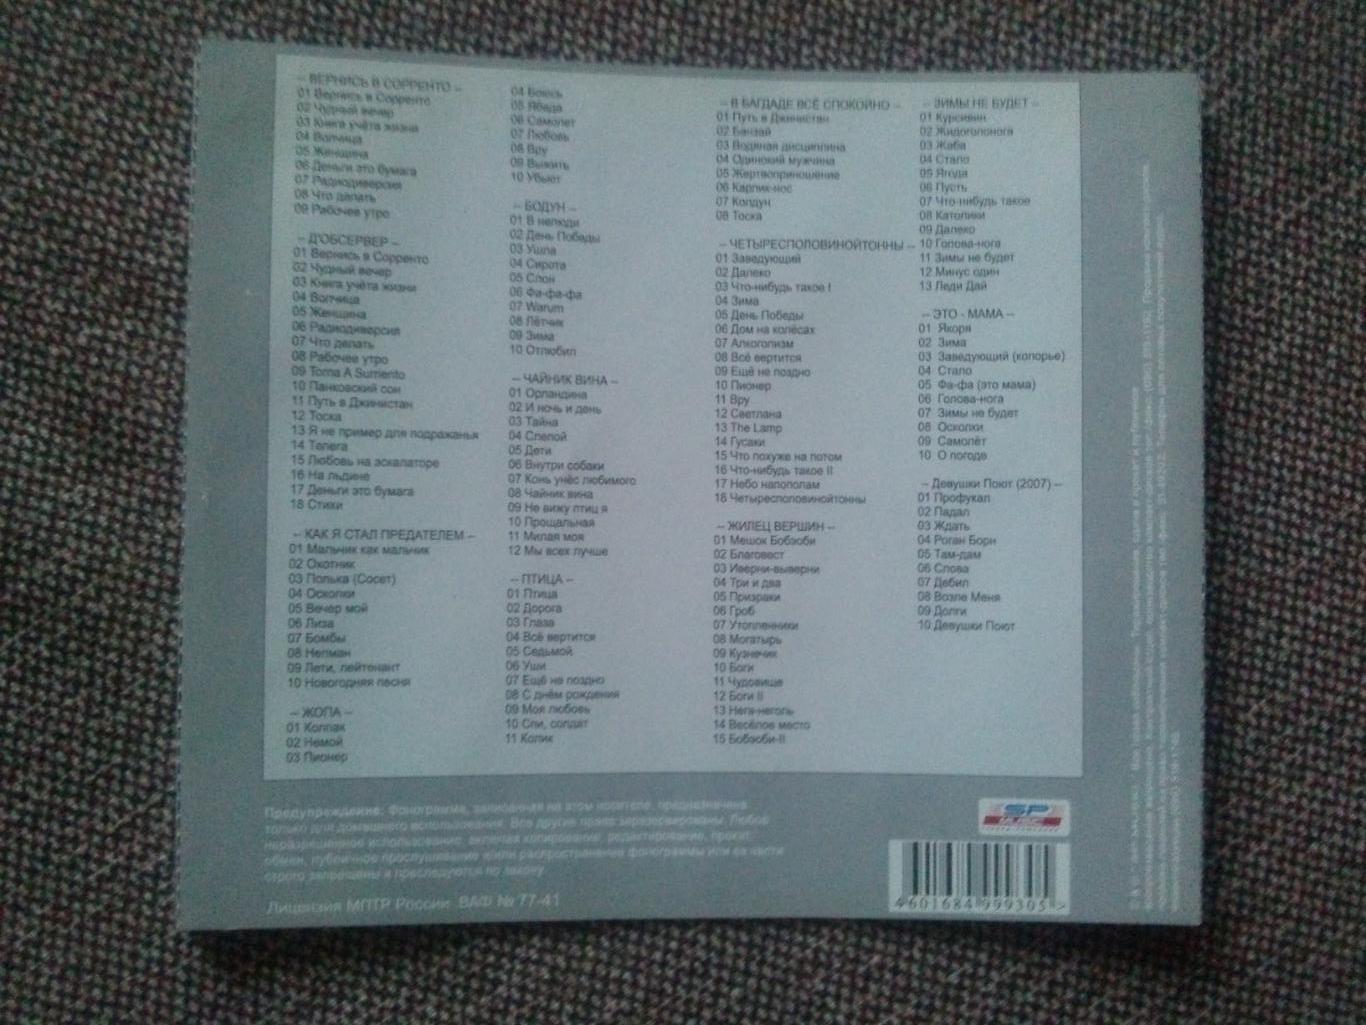 MP - 3 CD диск : группаАукцыон13 альбомов (Русская рок - музыка) 5